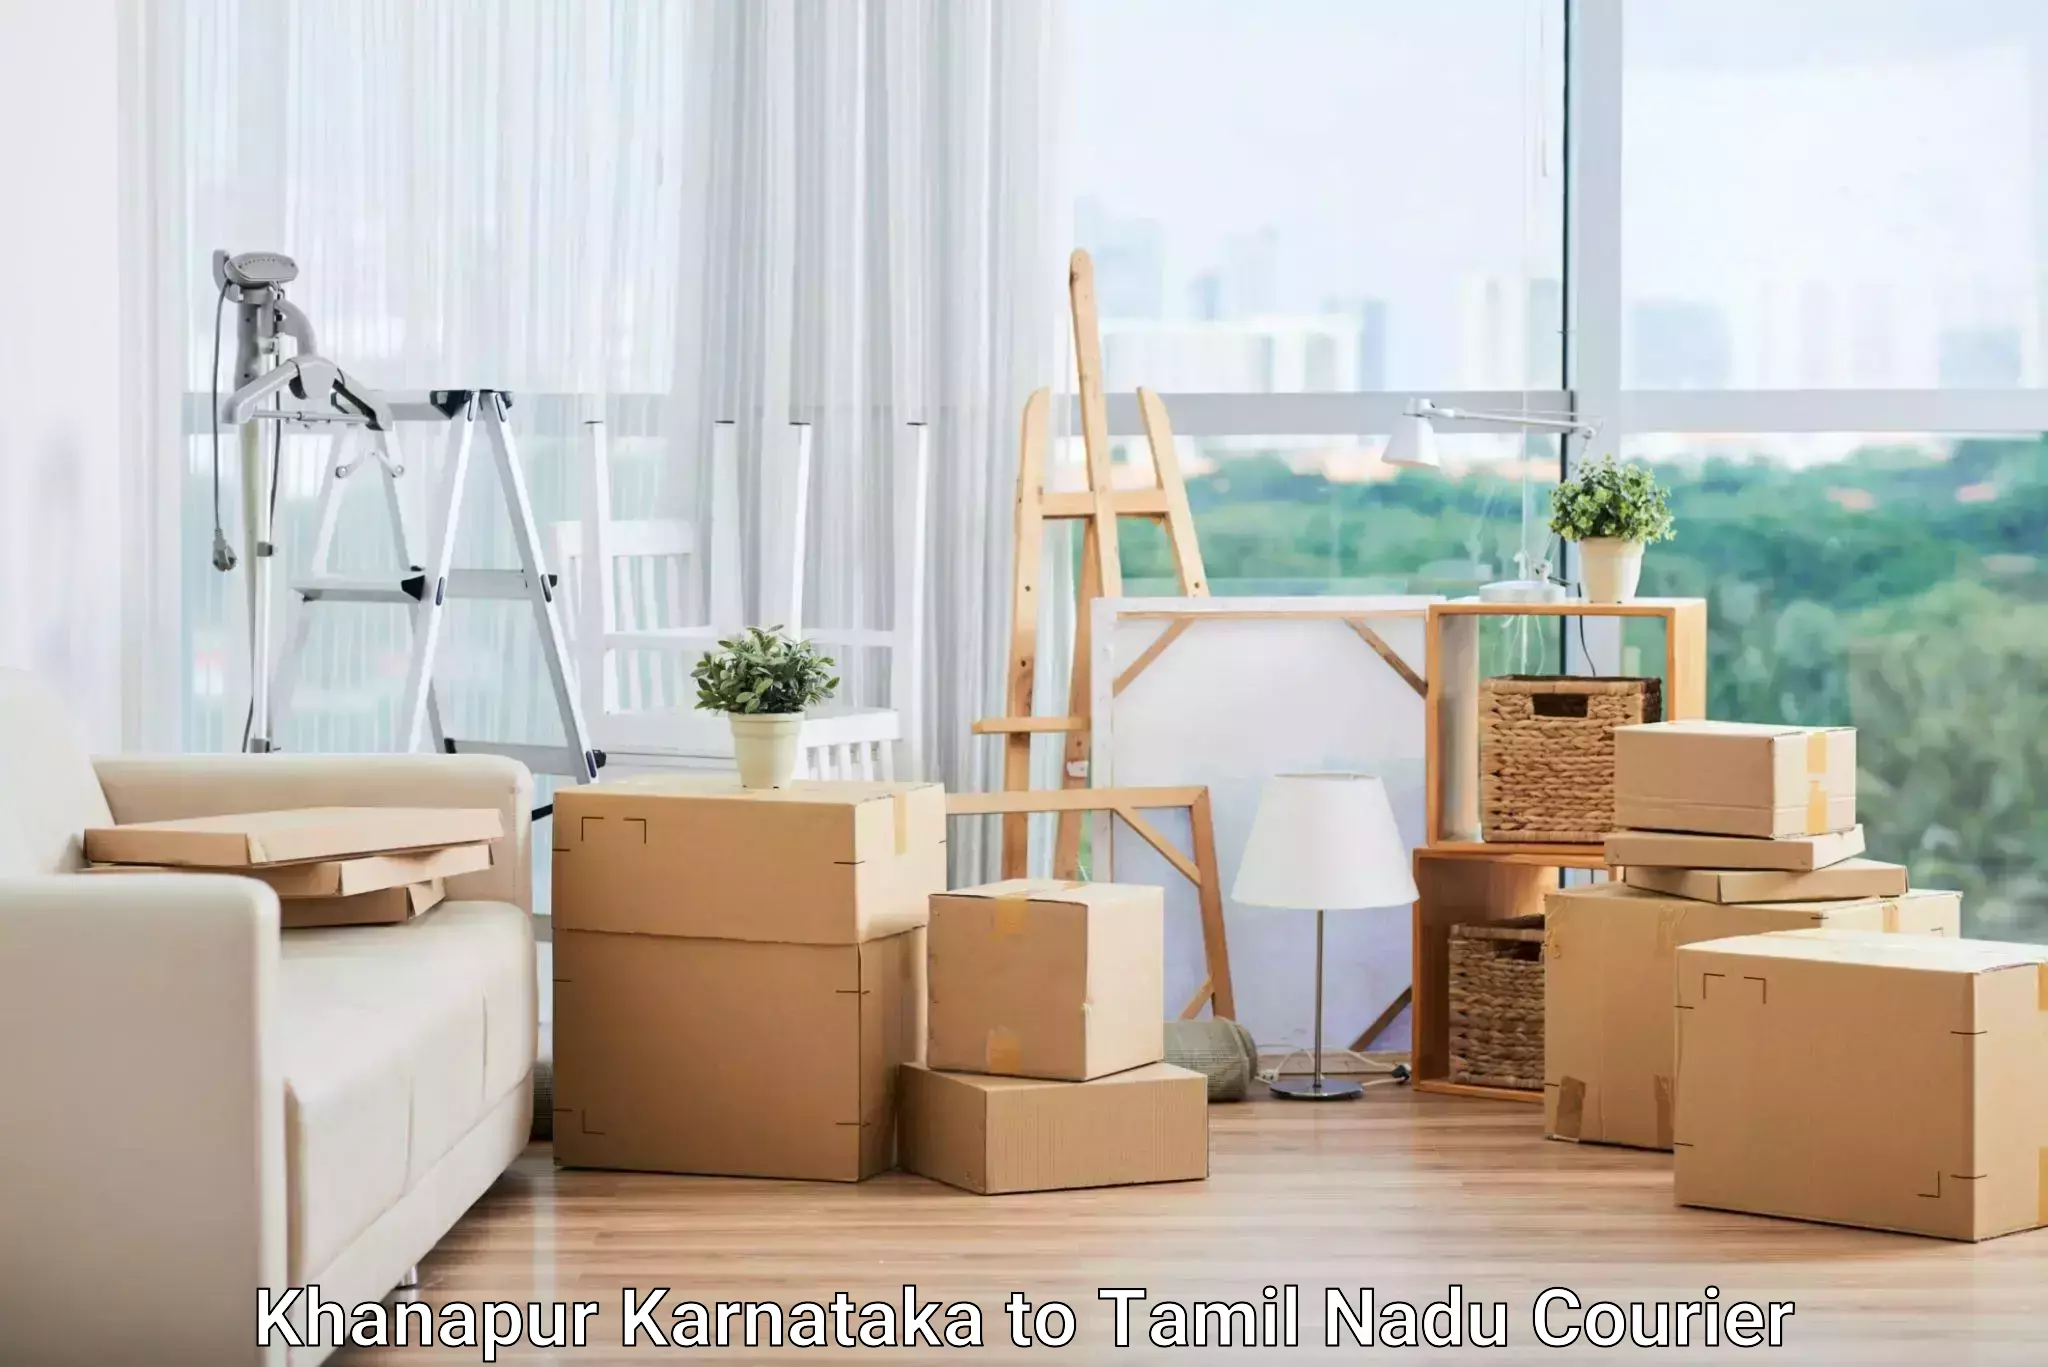 Flexible delivery scheduling Khanapur Karnataka to Tiruppur